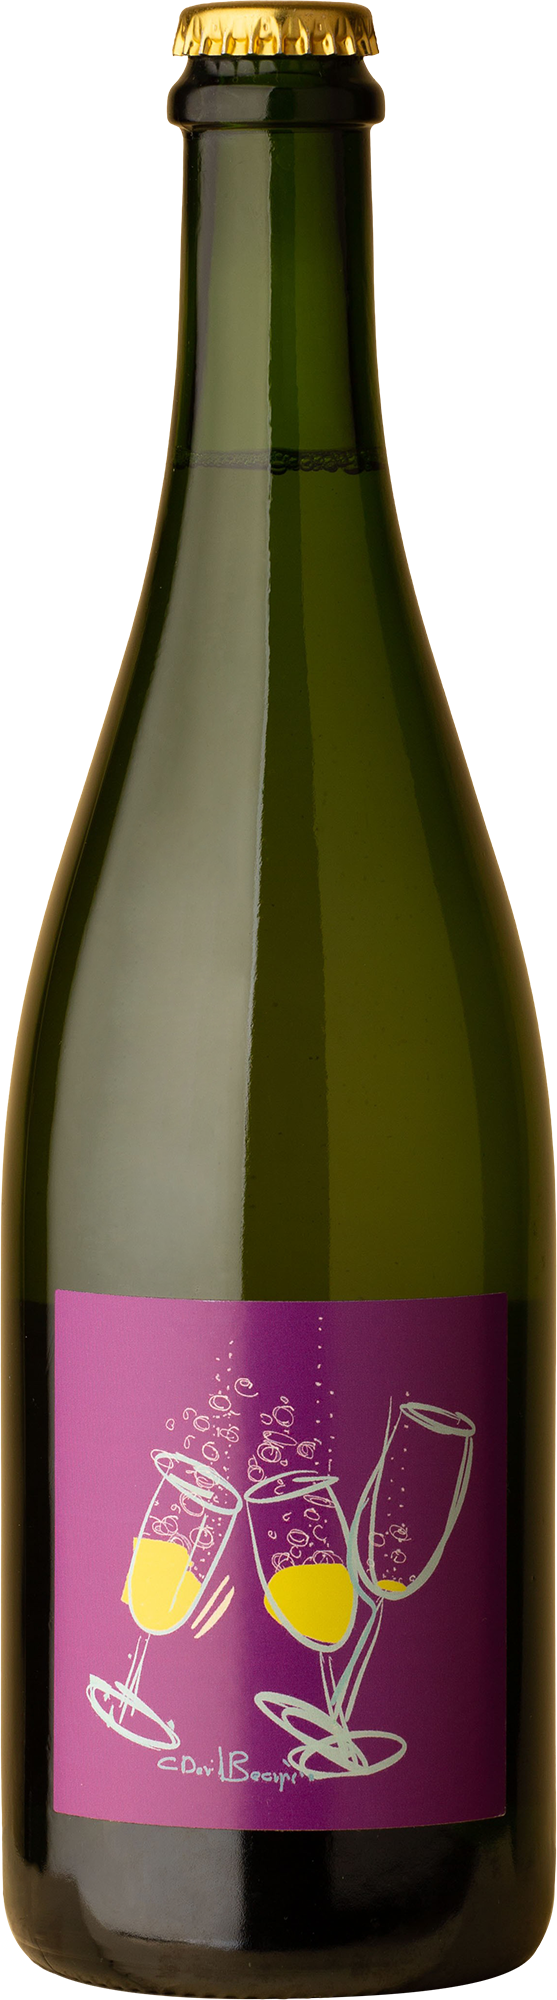 David Beaupere - Beaujolais Pet Nat Gamay 2020 Sparkling Wine